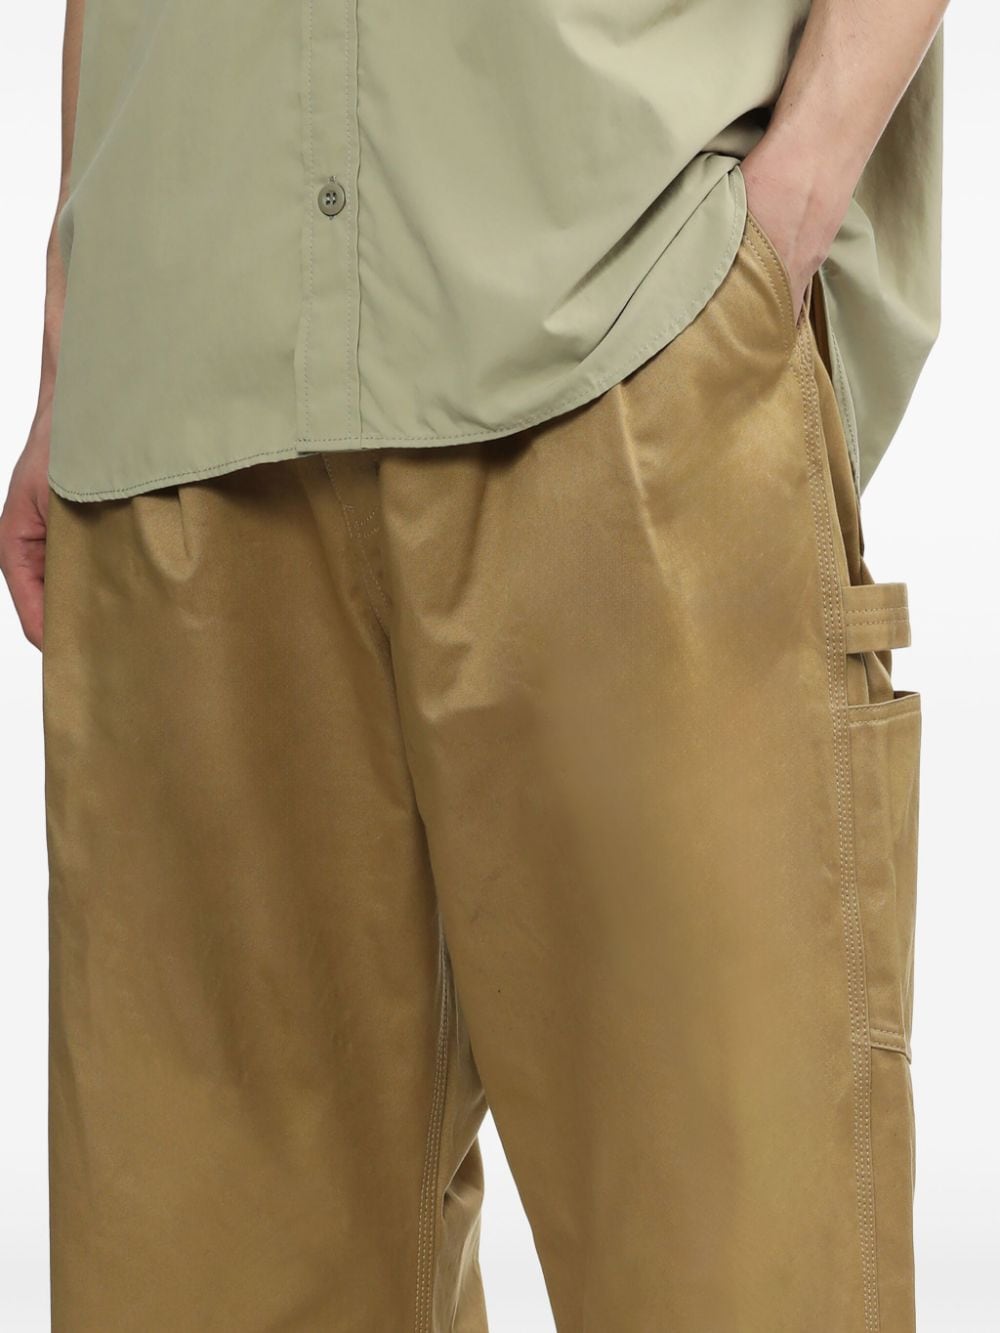 x Carhartt WIP wide-leg trousers<BR/><BR/><BR/>